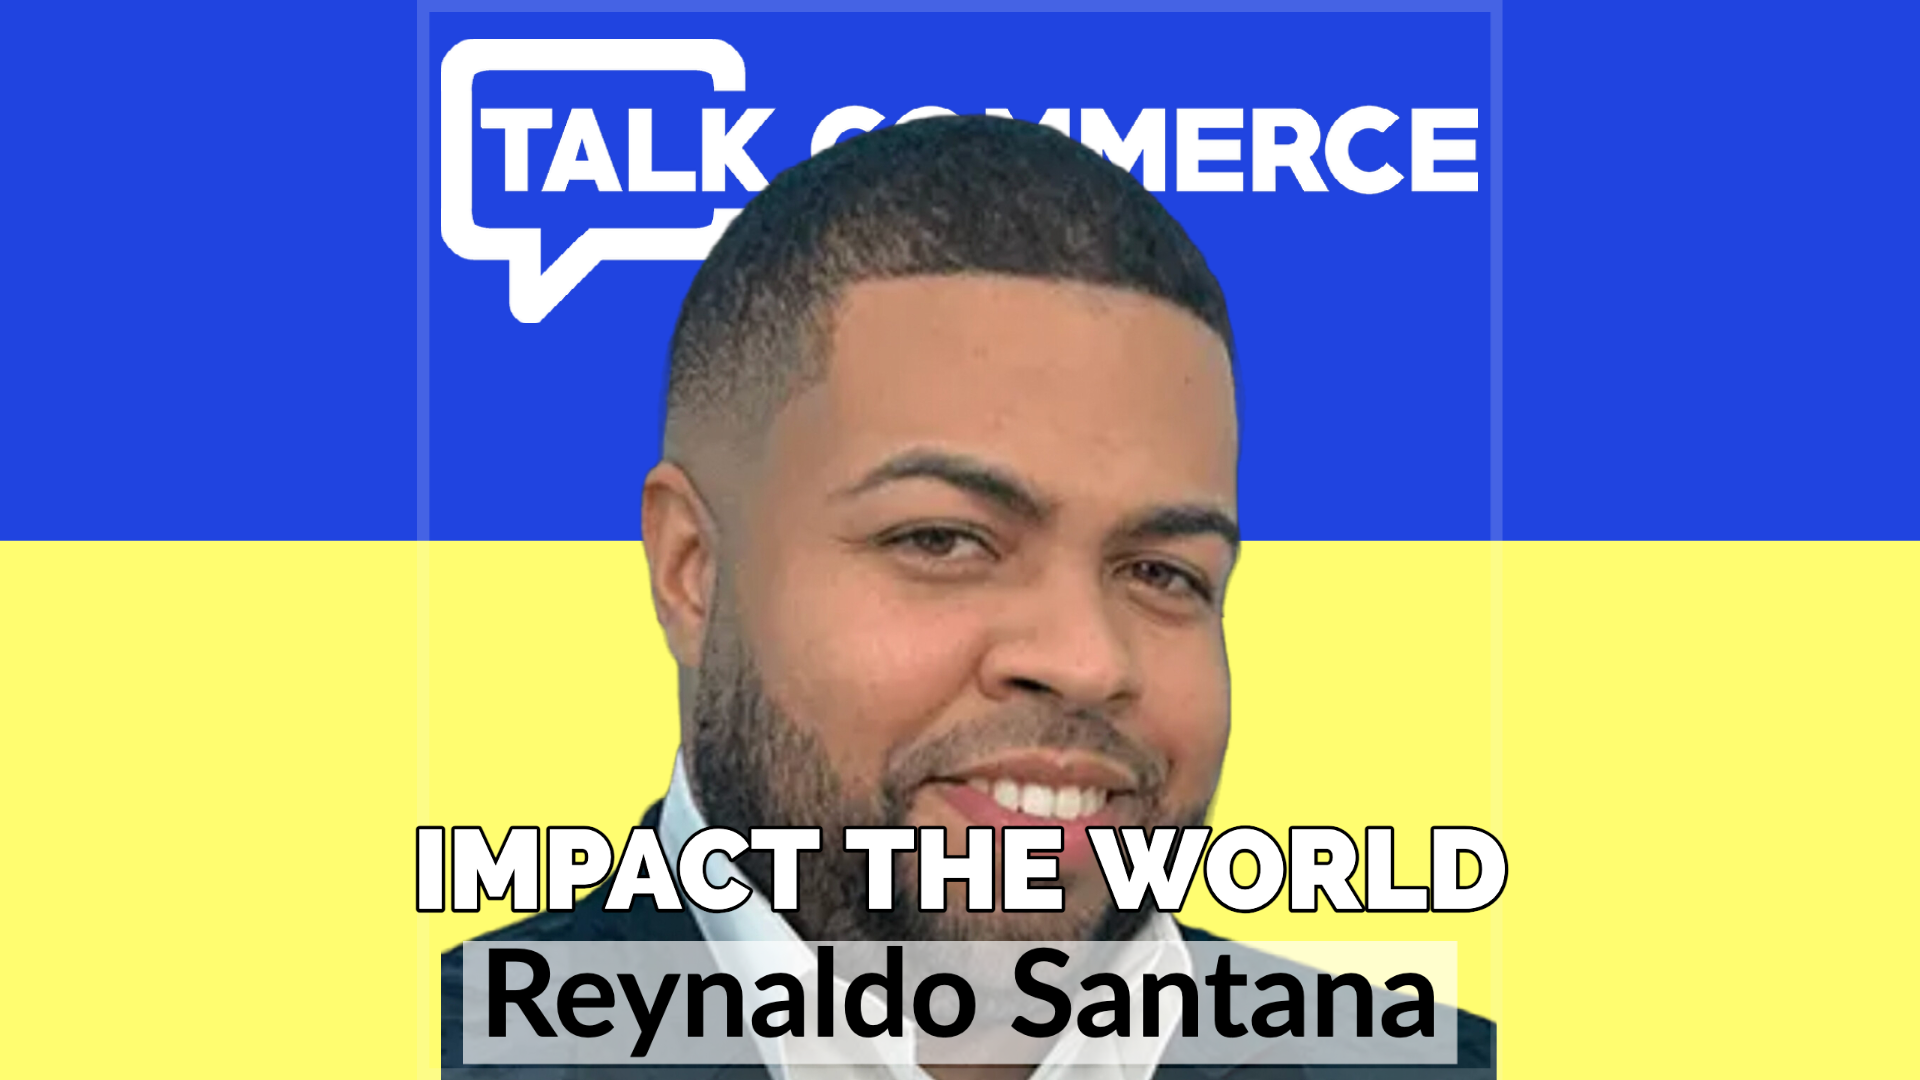 Talk Commerce Reynaldo Santana